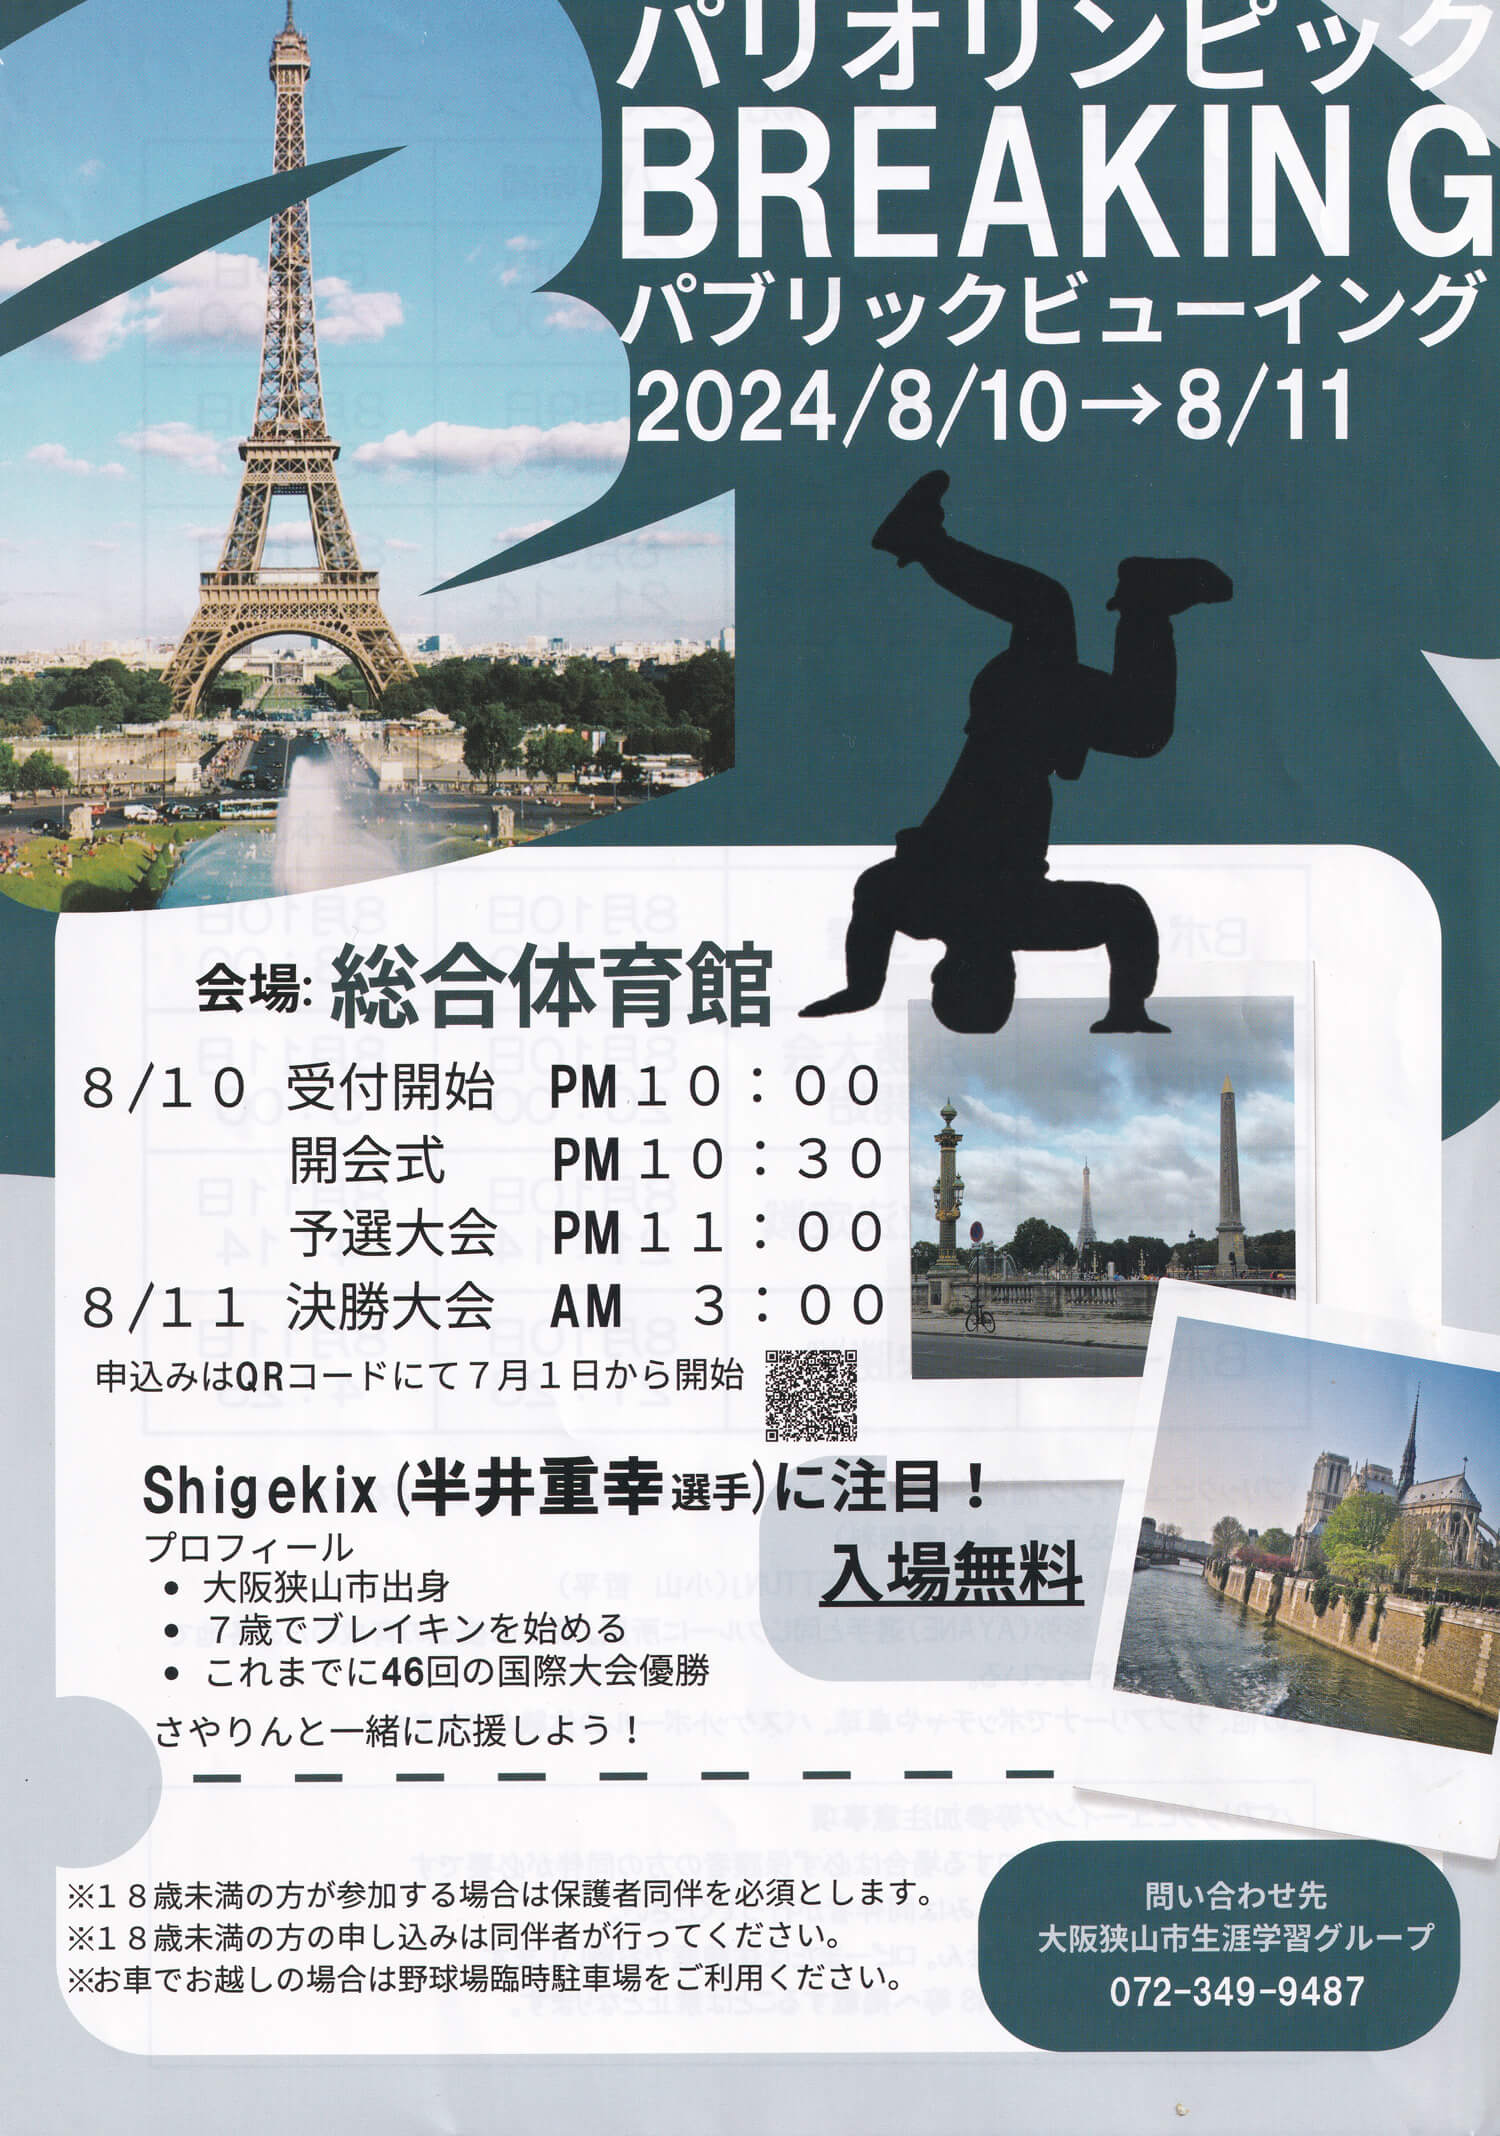 Shigekix(半井 重幸 選手)を応援しよう！「パリ五輪BREAKINGパブリックビューイング」が、総合体育館で2024年8月10日・11日に開催！ (2)